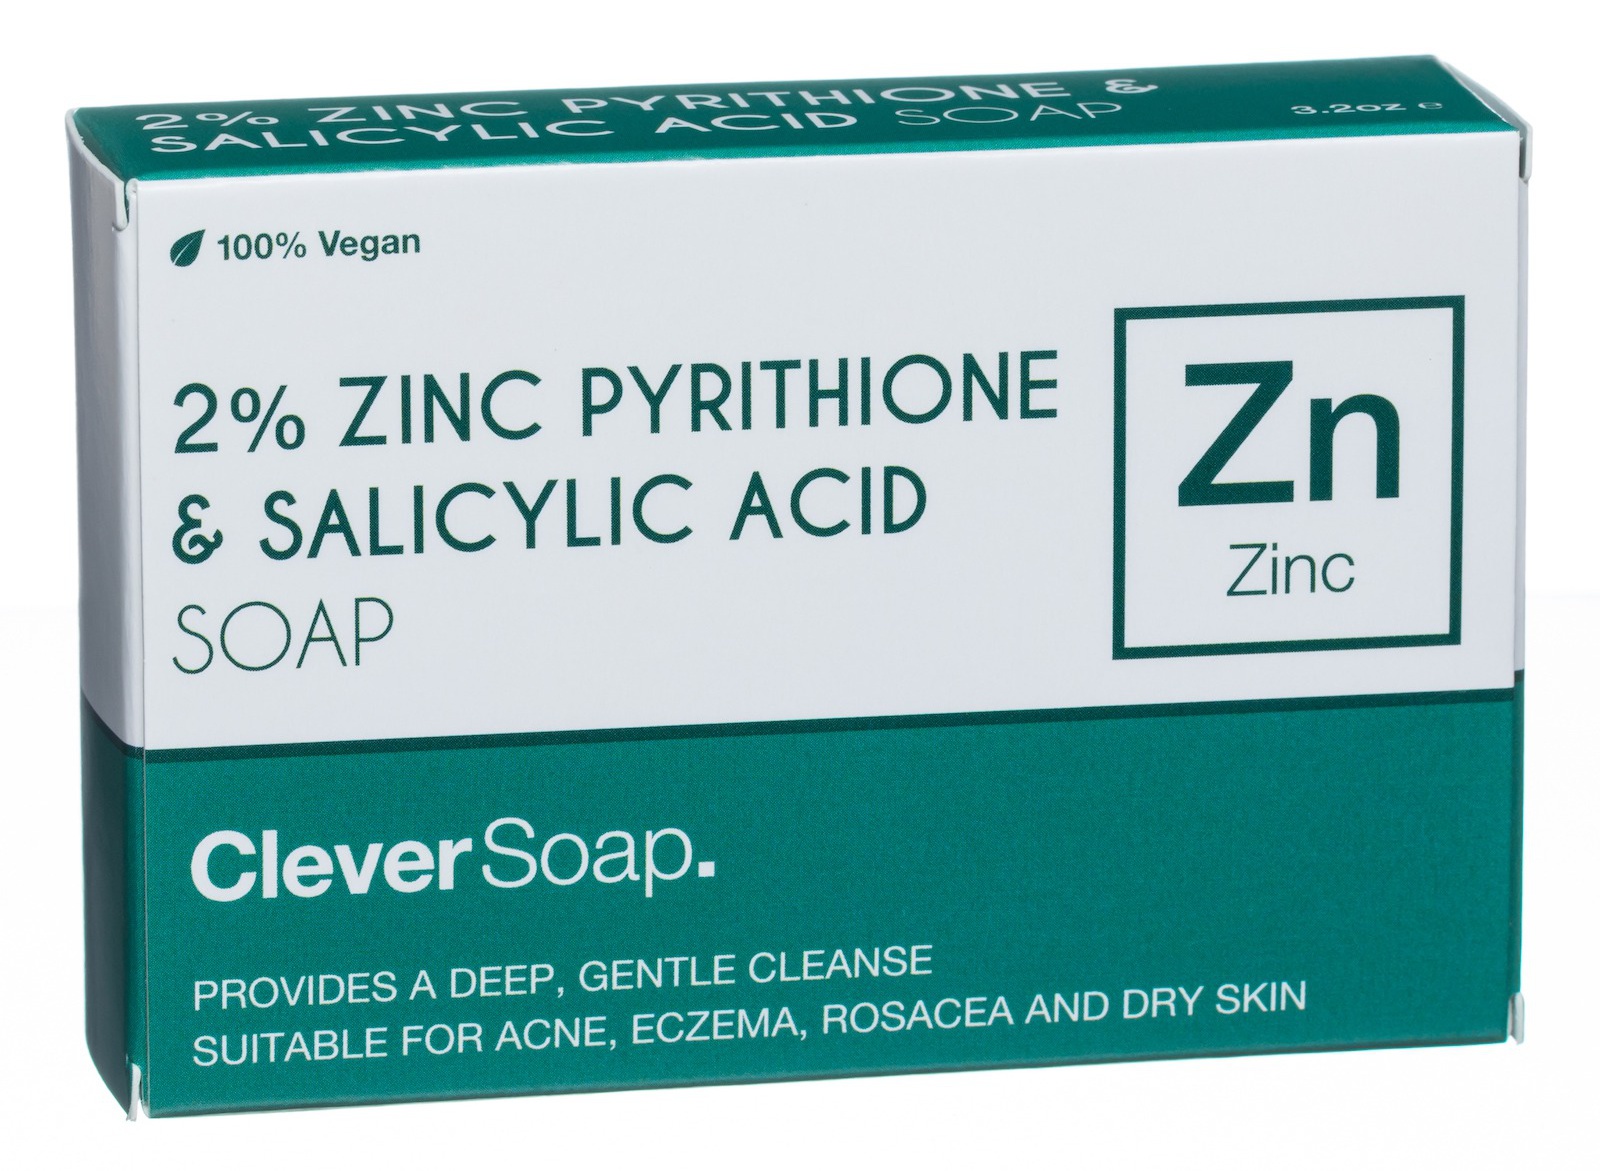 Clever Soap 2% Zinc Pyrithione & Salicylic Acid Soap Bar